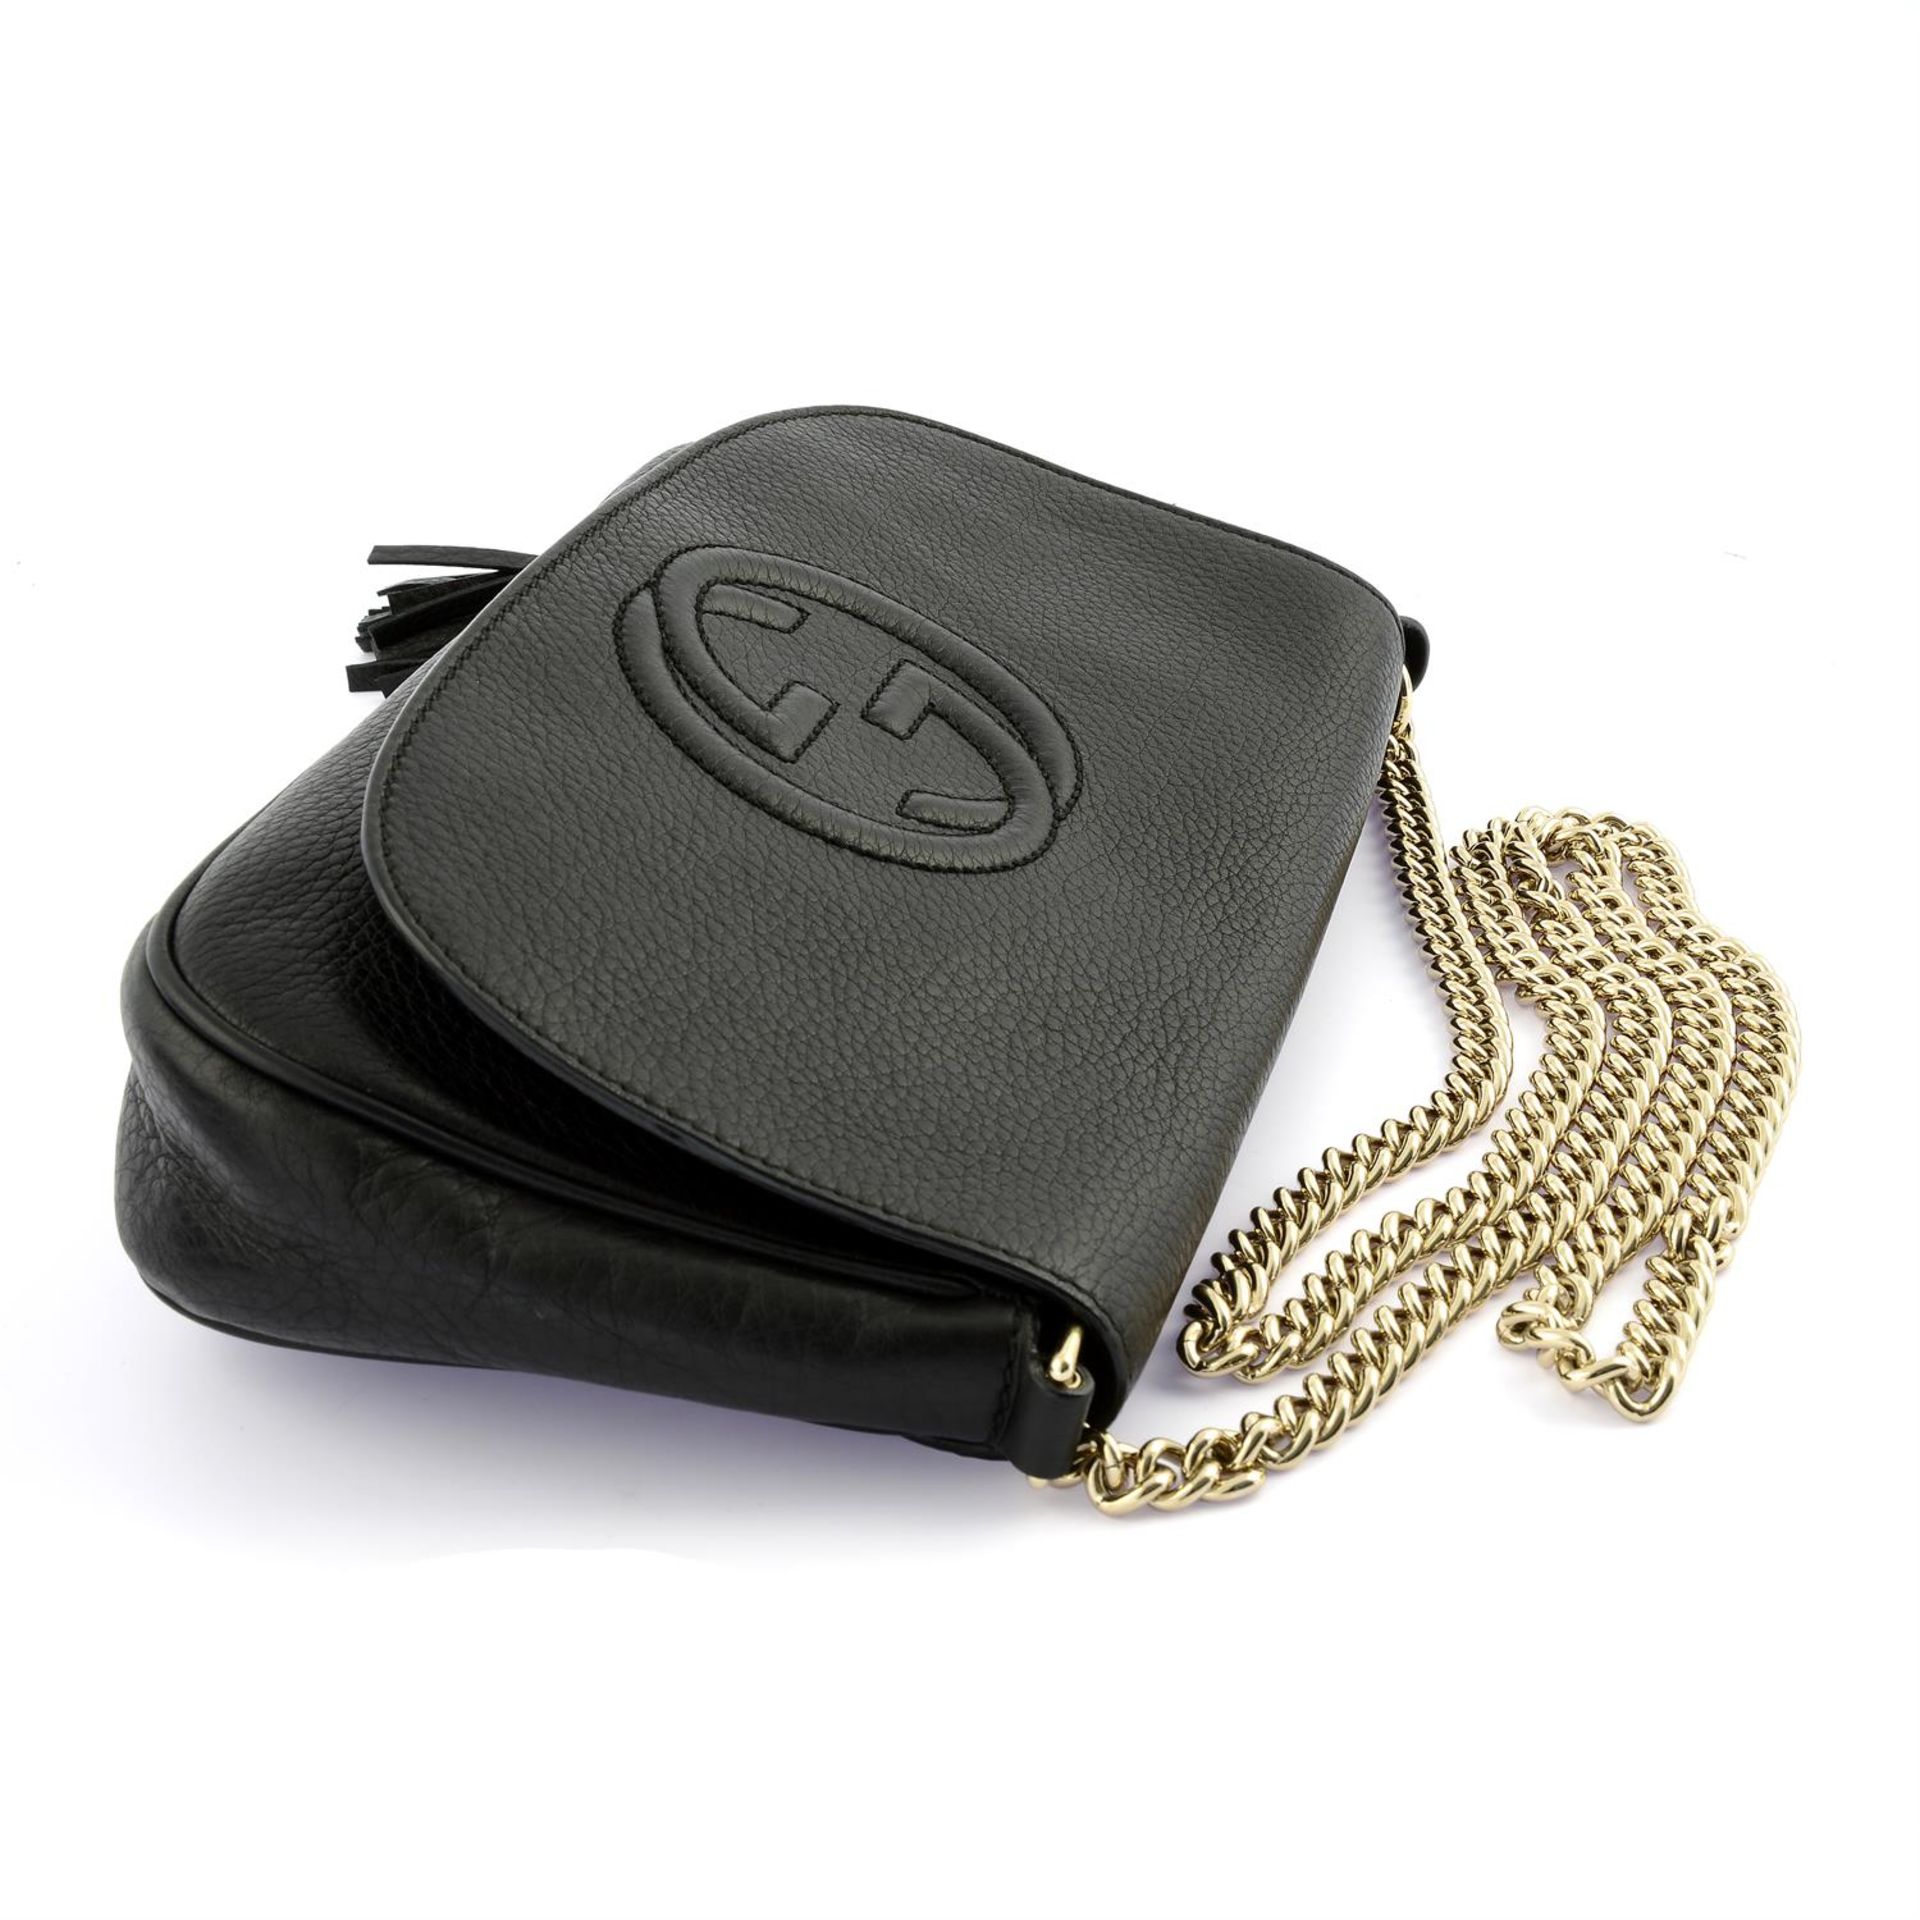 GUCCI - a black leather Soho crossbody bag. - Image 3 of 4